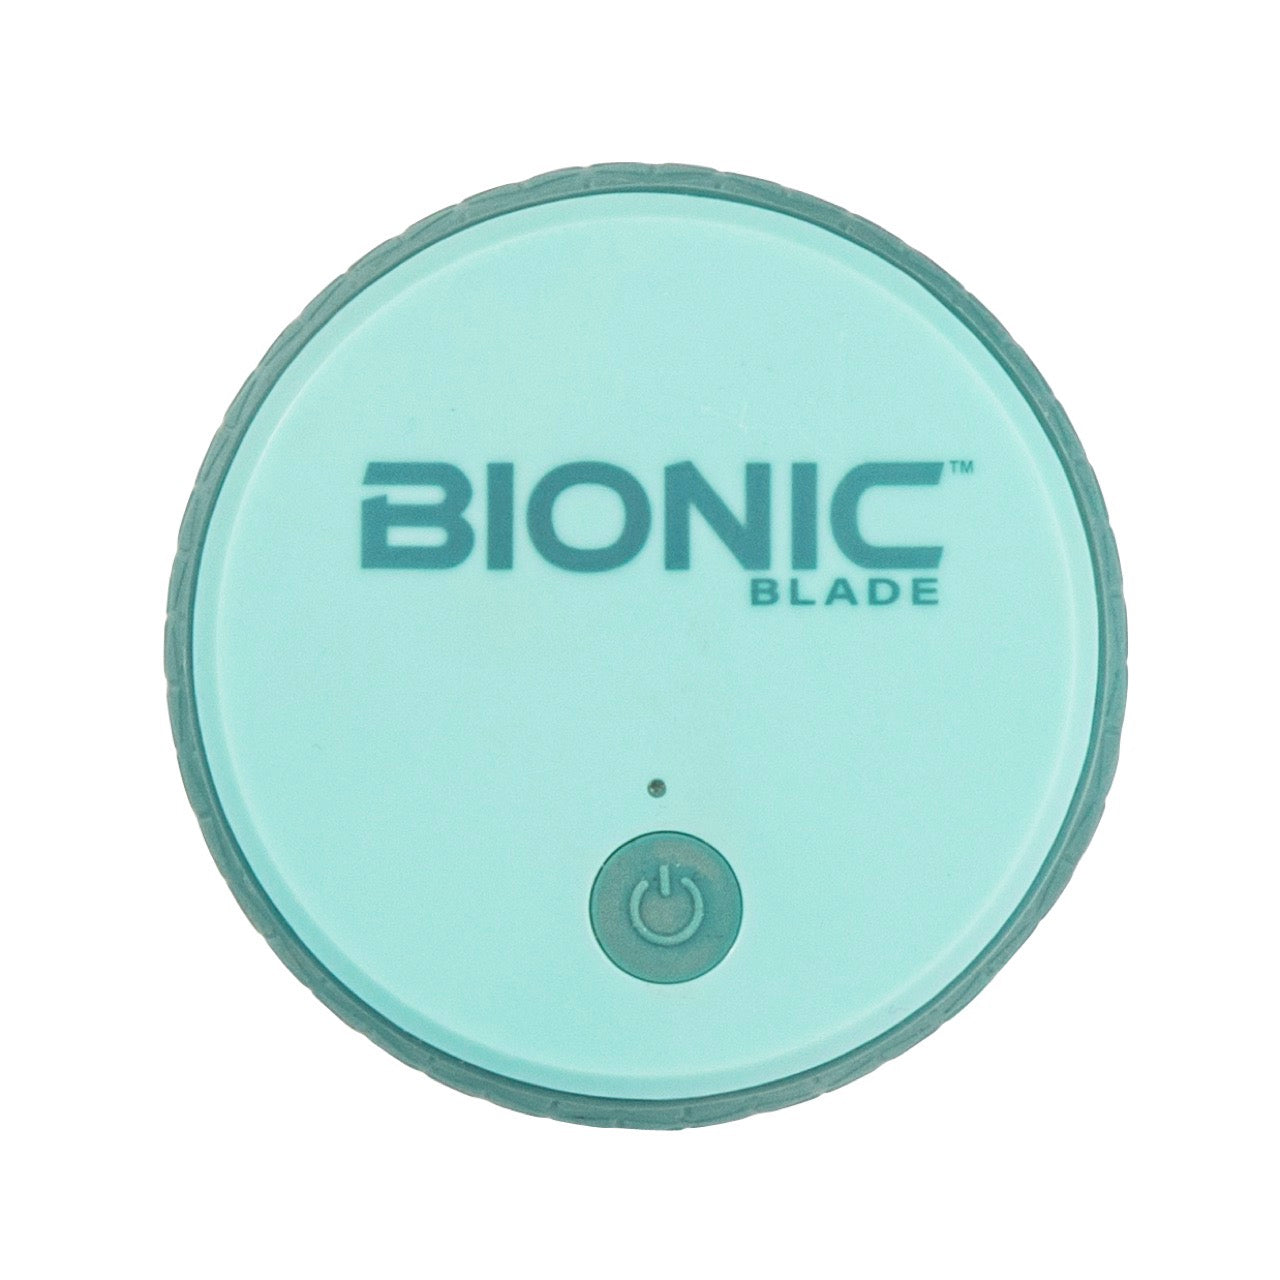 bionic blade portable blender the ultimate｜TikTok Search